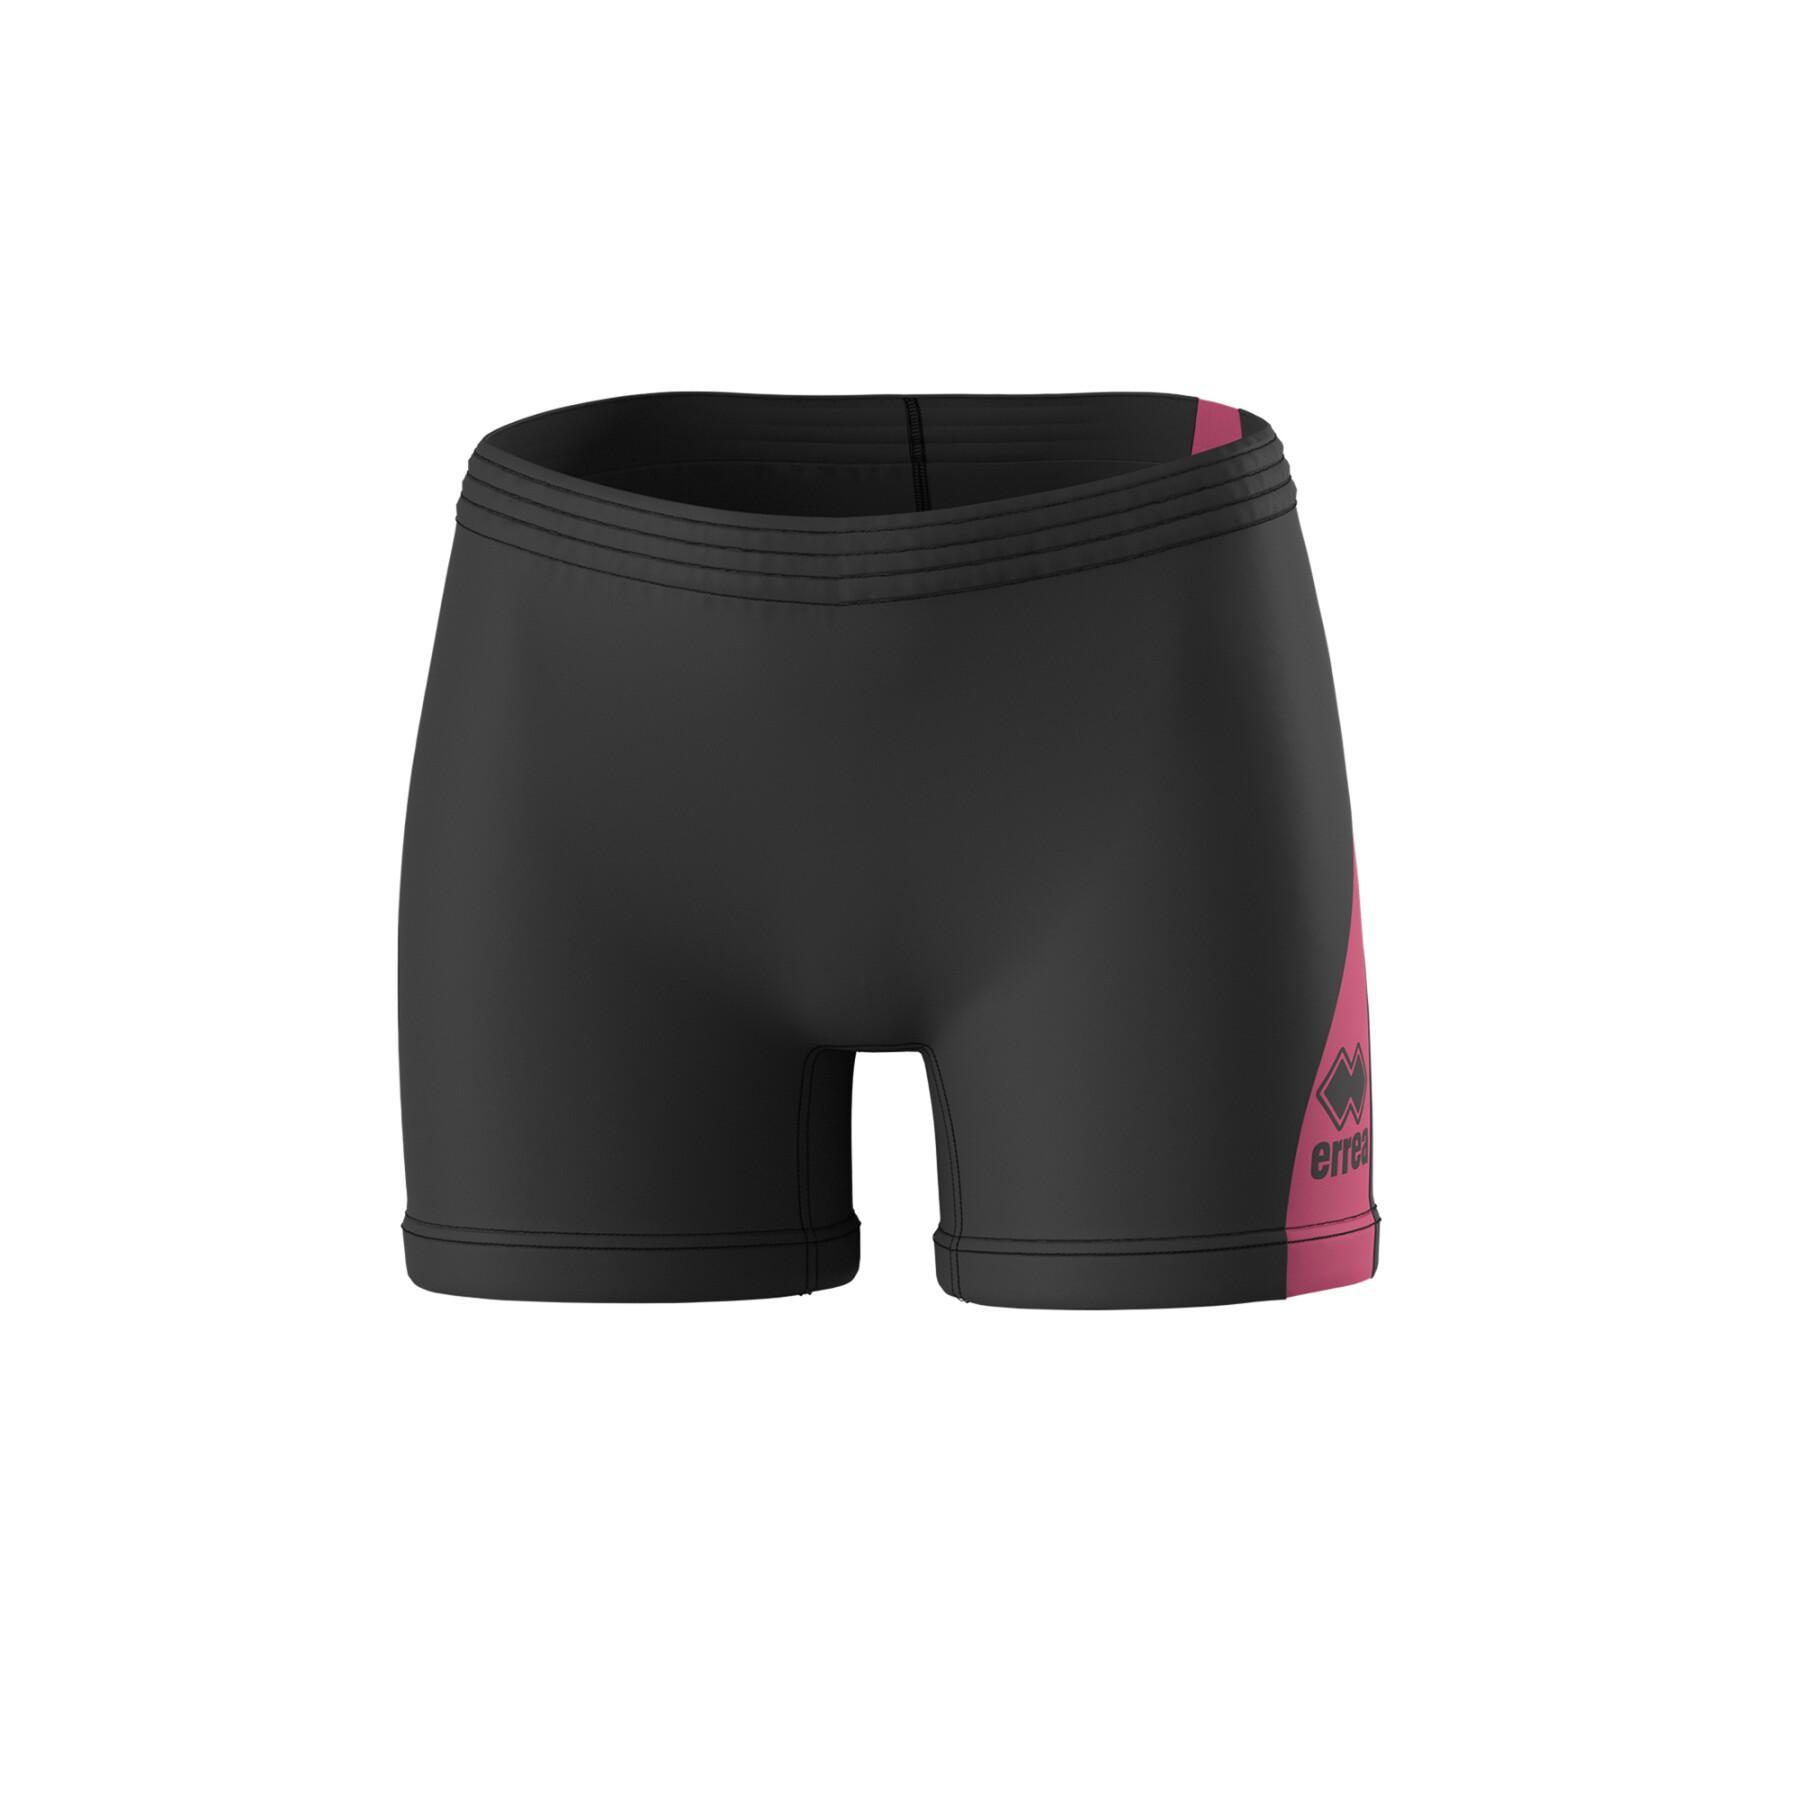 Shorts för kvinnor Errea Amazon 3.0